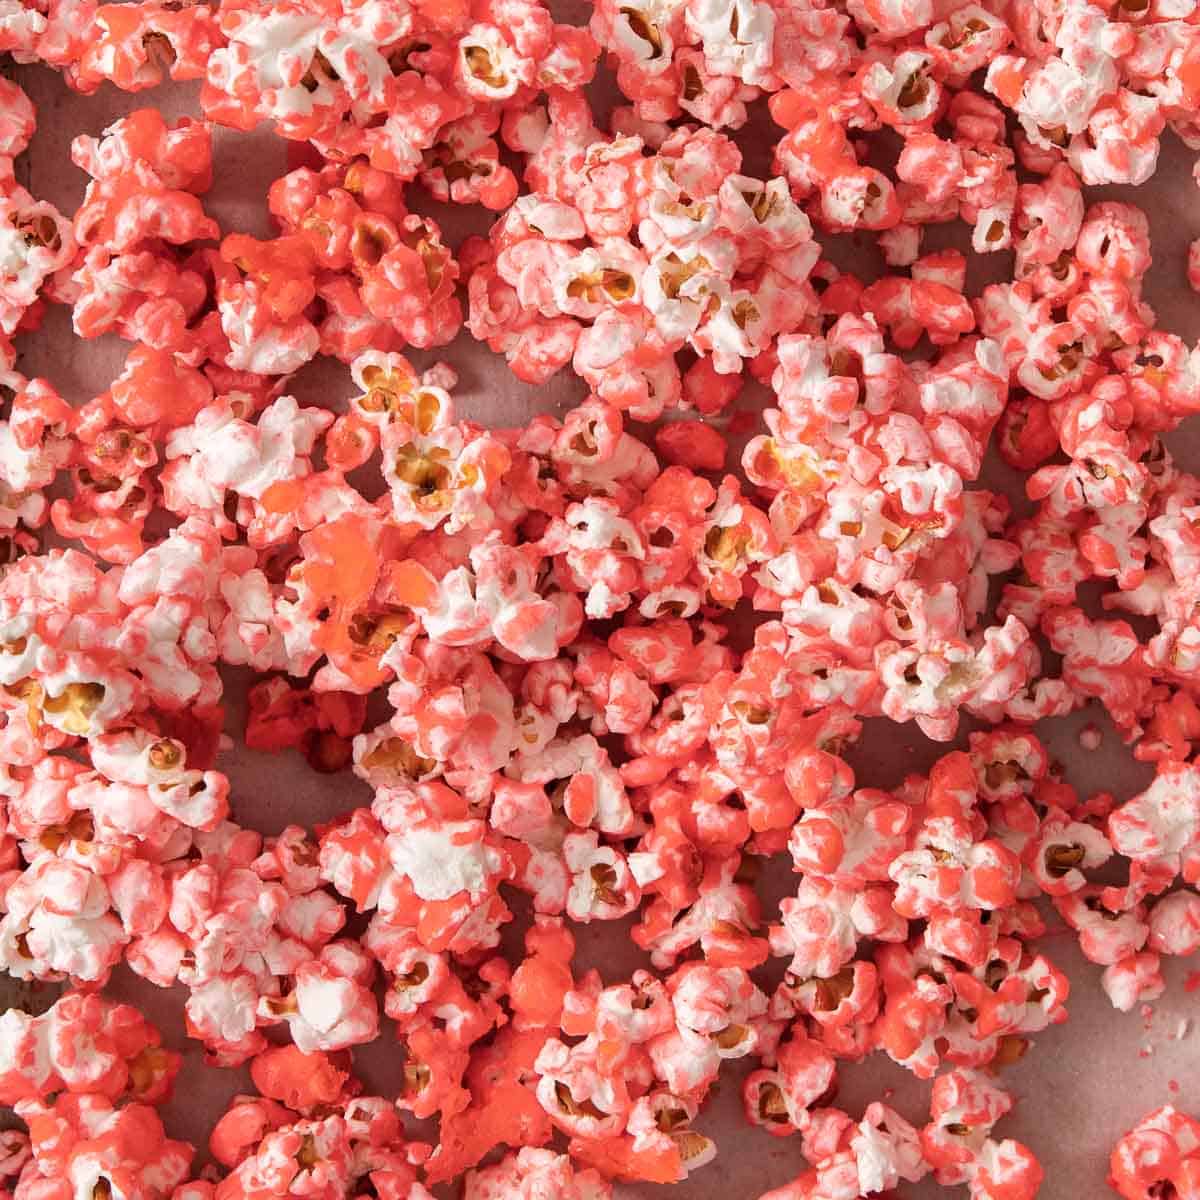 Candy popcorn on a baking sheet